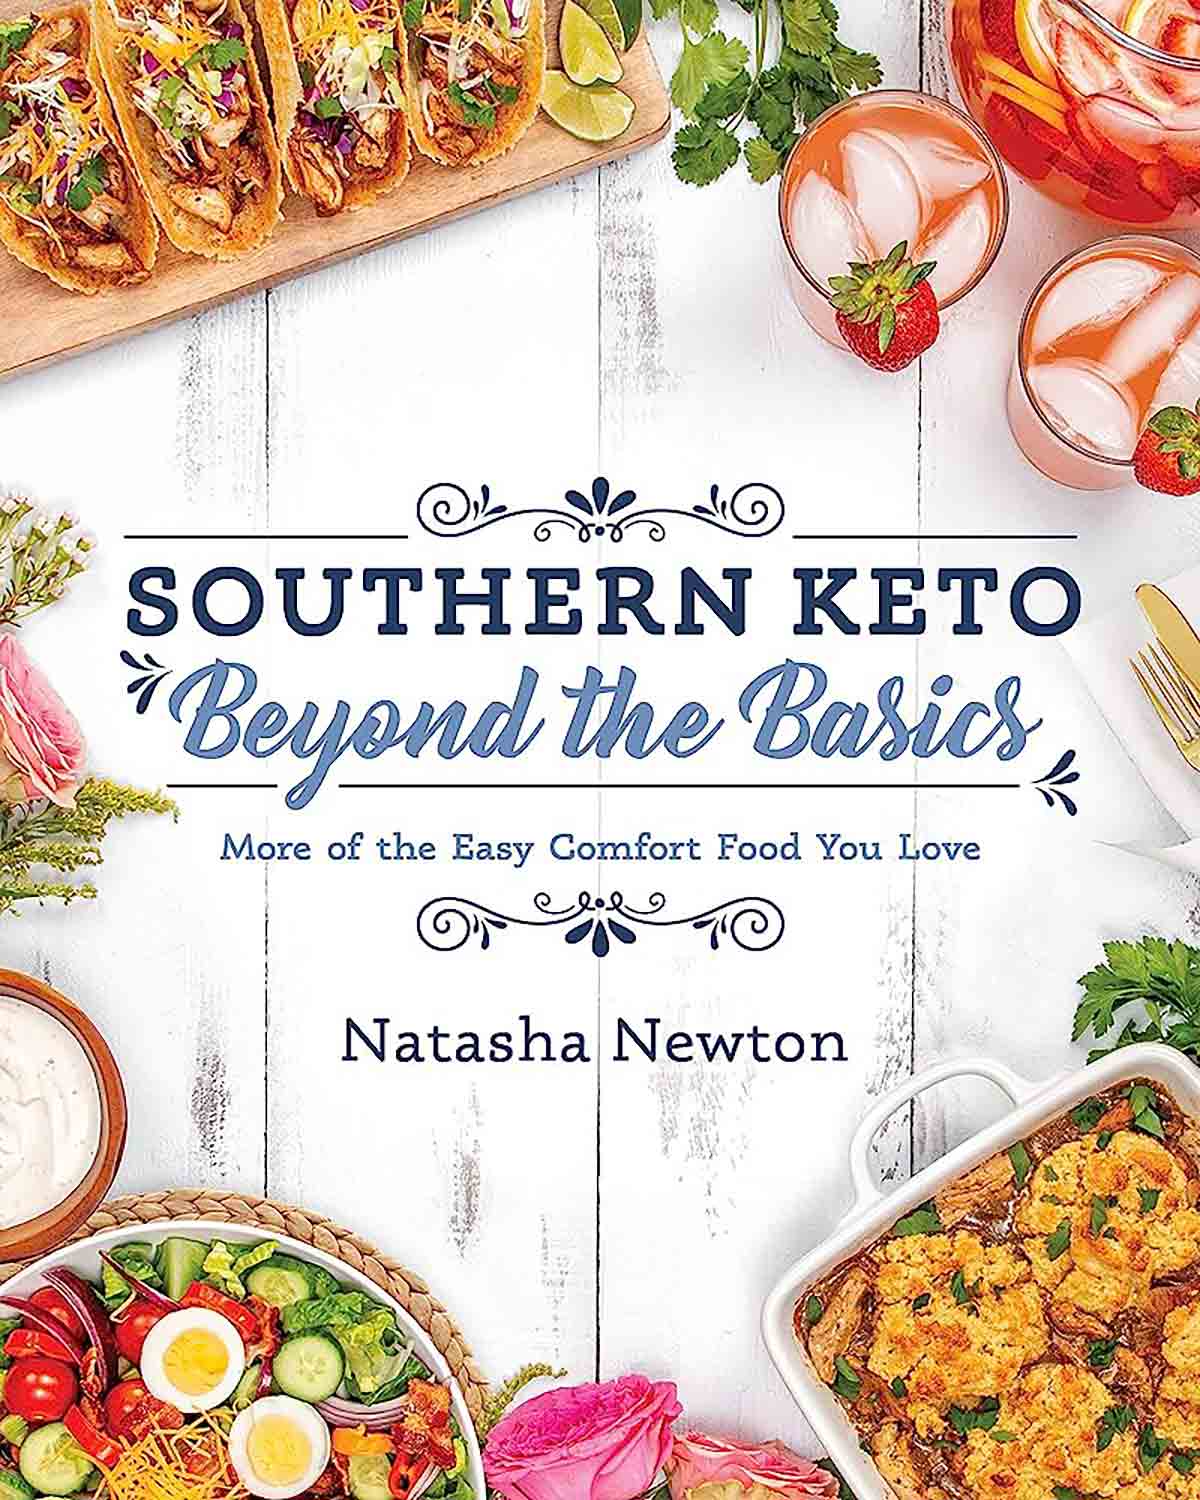 Southern Keto: Beyond the Basics Cookbook.